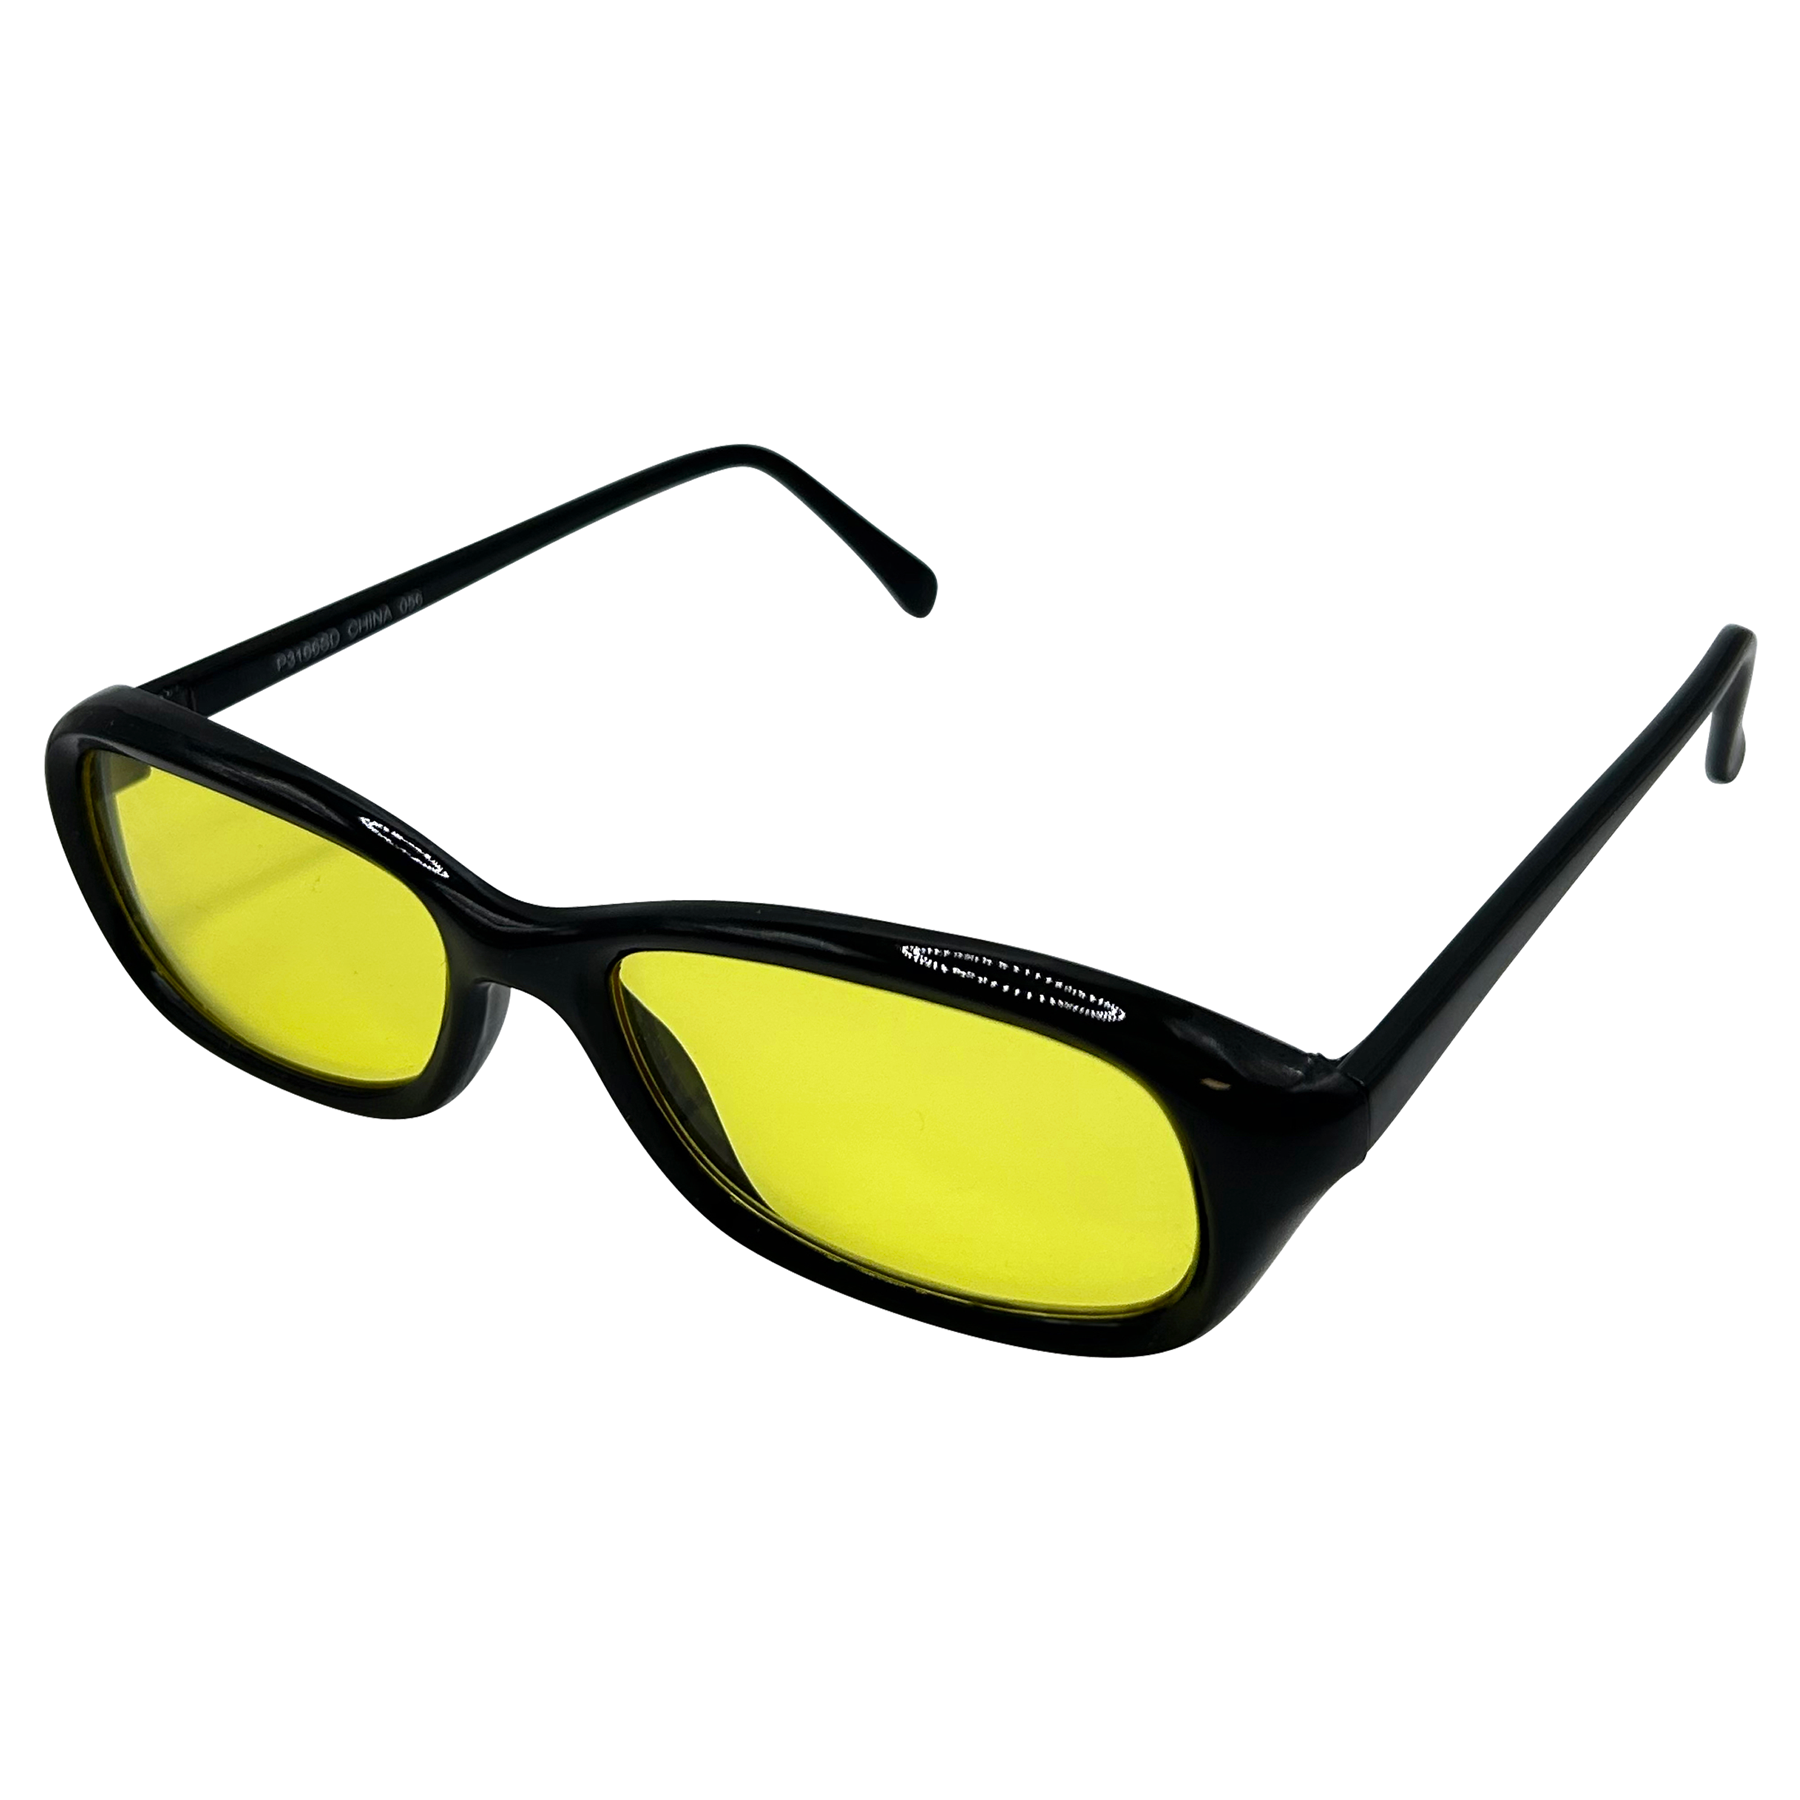 SOAPY Square Y2K Sunglasses